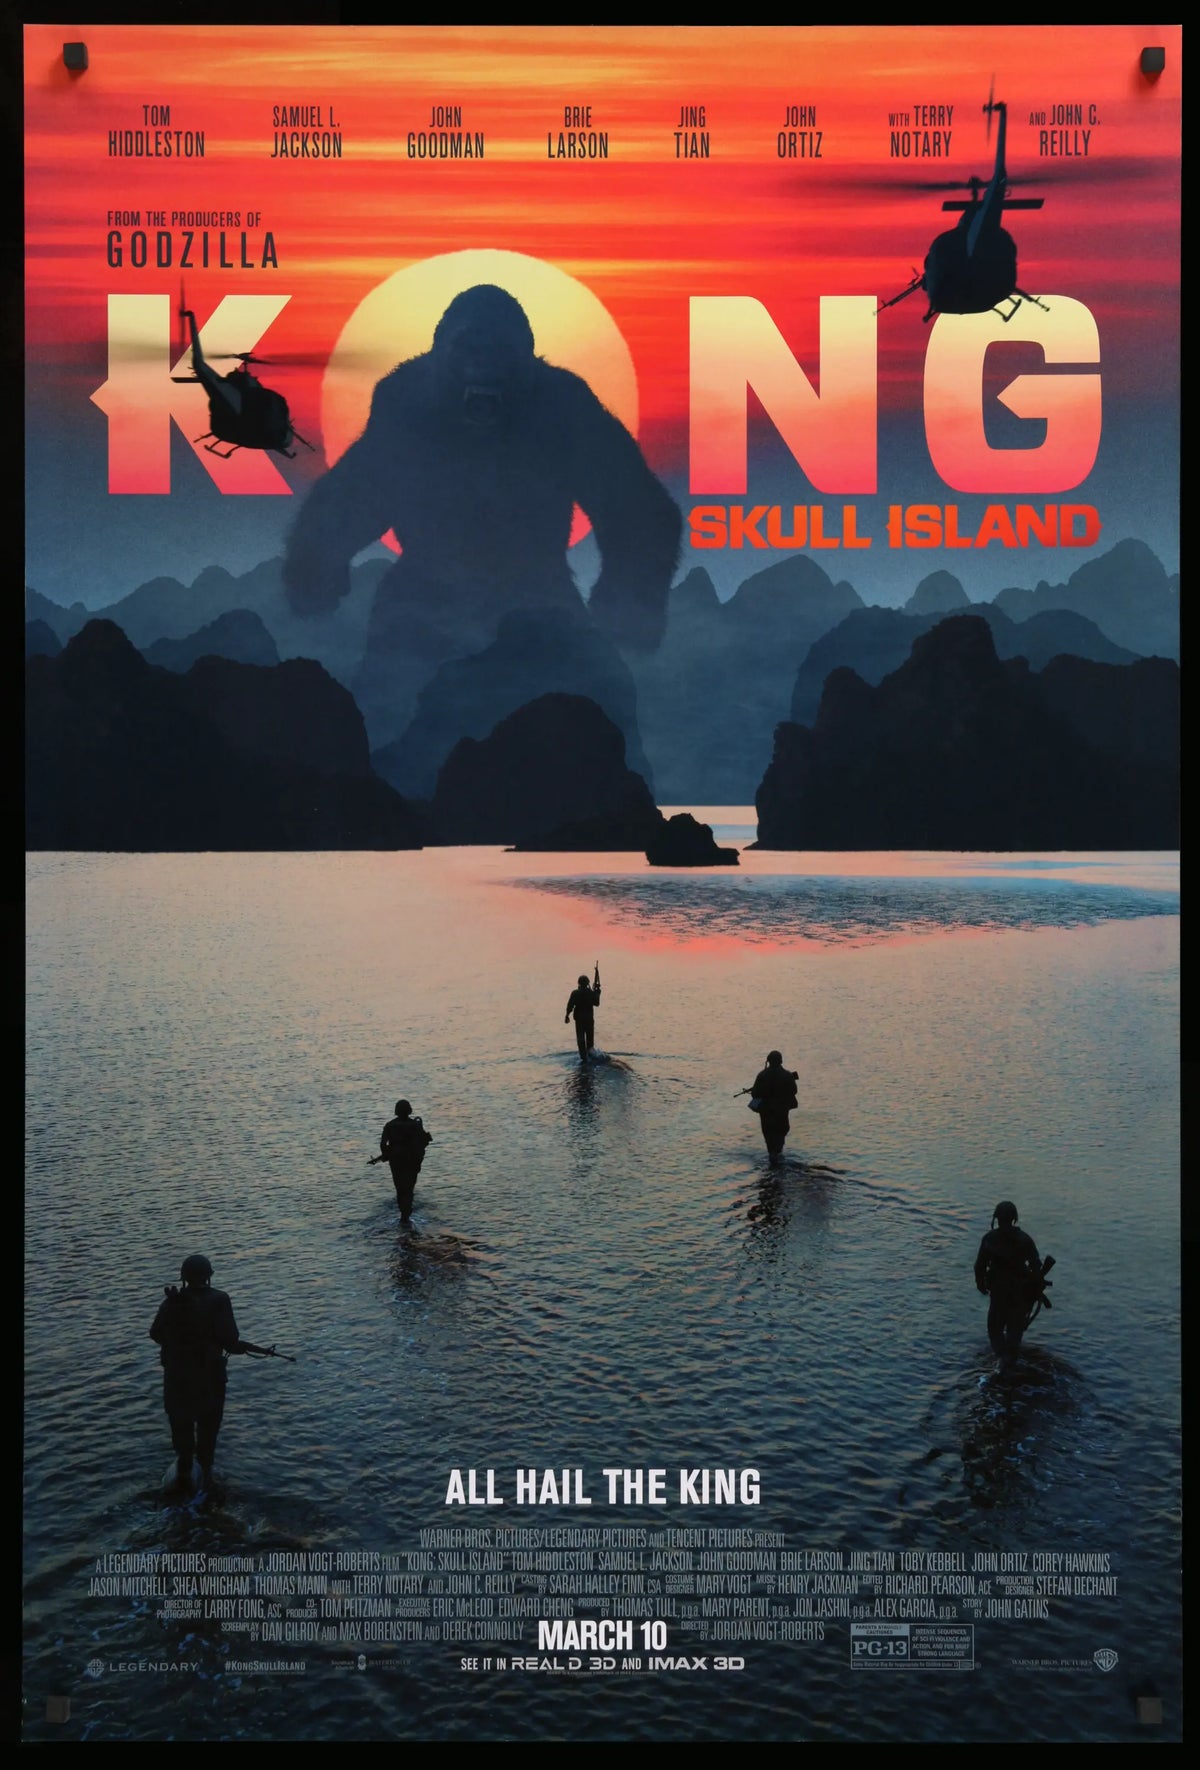 Kong: Skull Island (2017) original movie poster for sale at Original Film Art